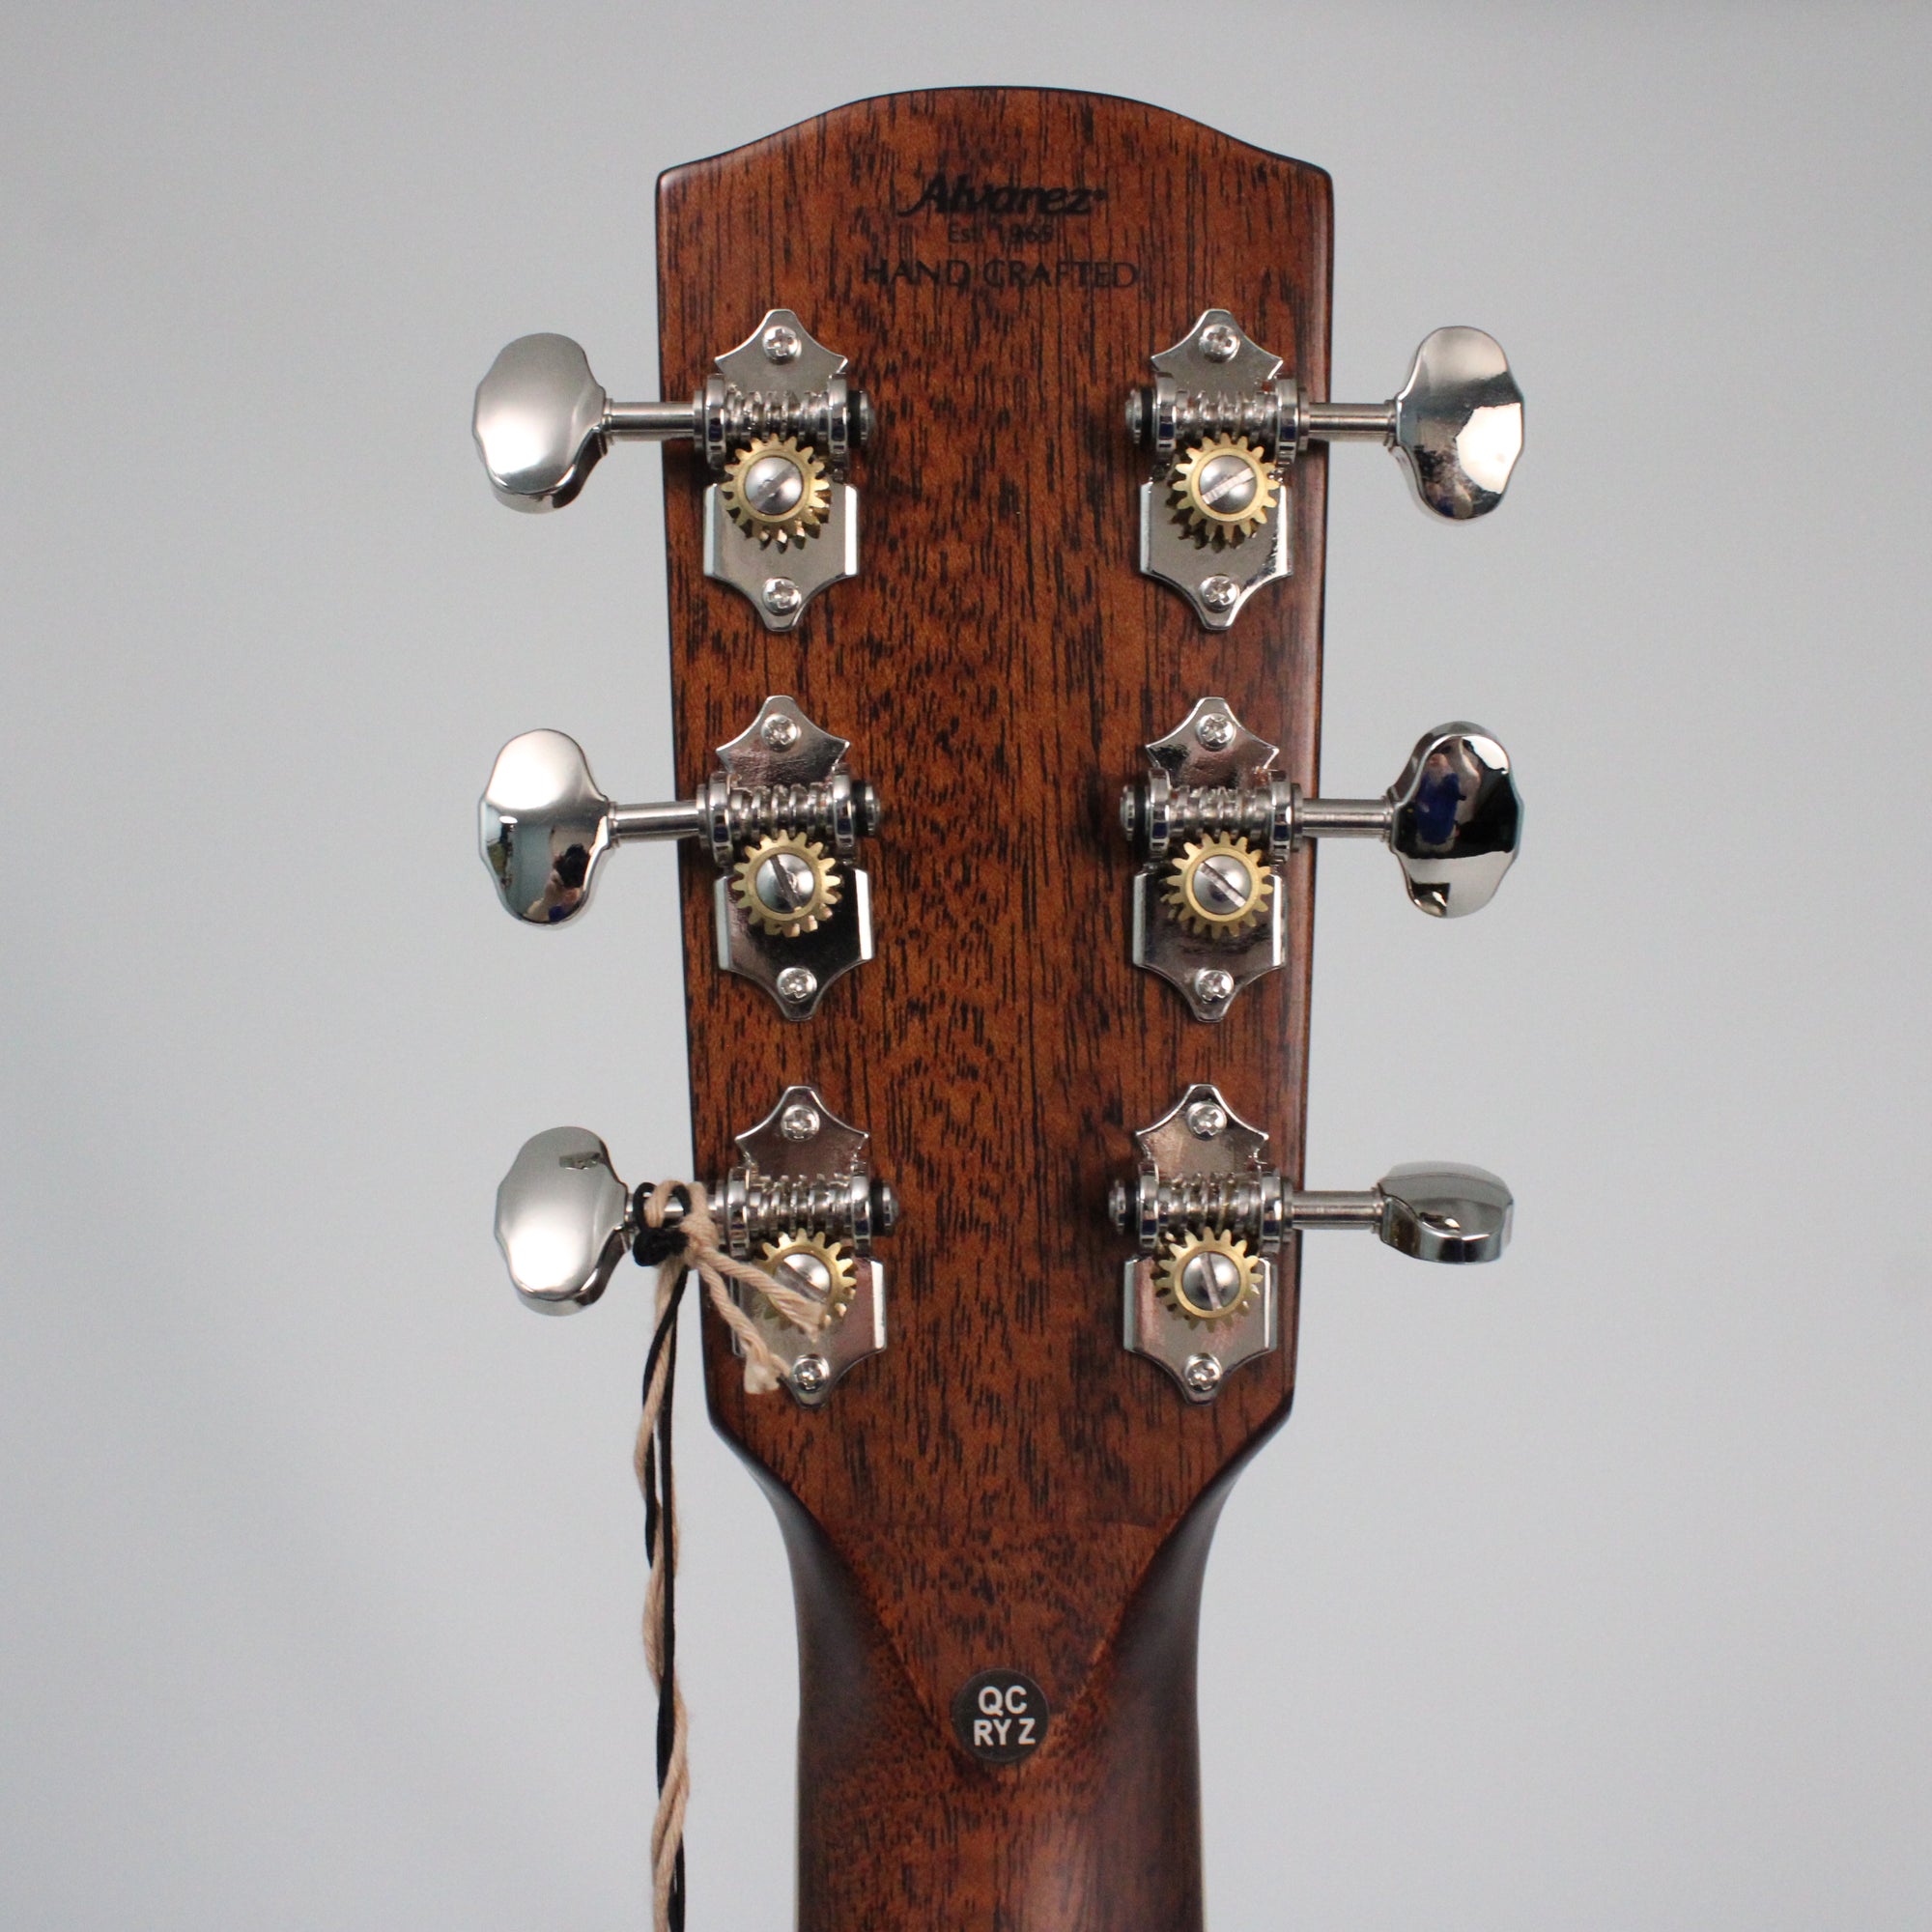 Alvarez MD70EBG Acoustic Electric Bluegrass Guitar Headstock back